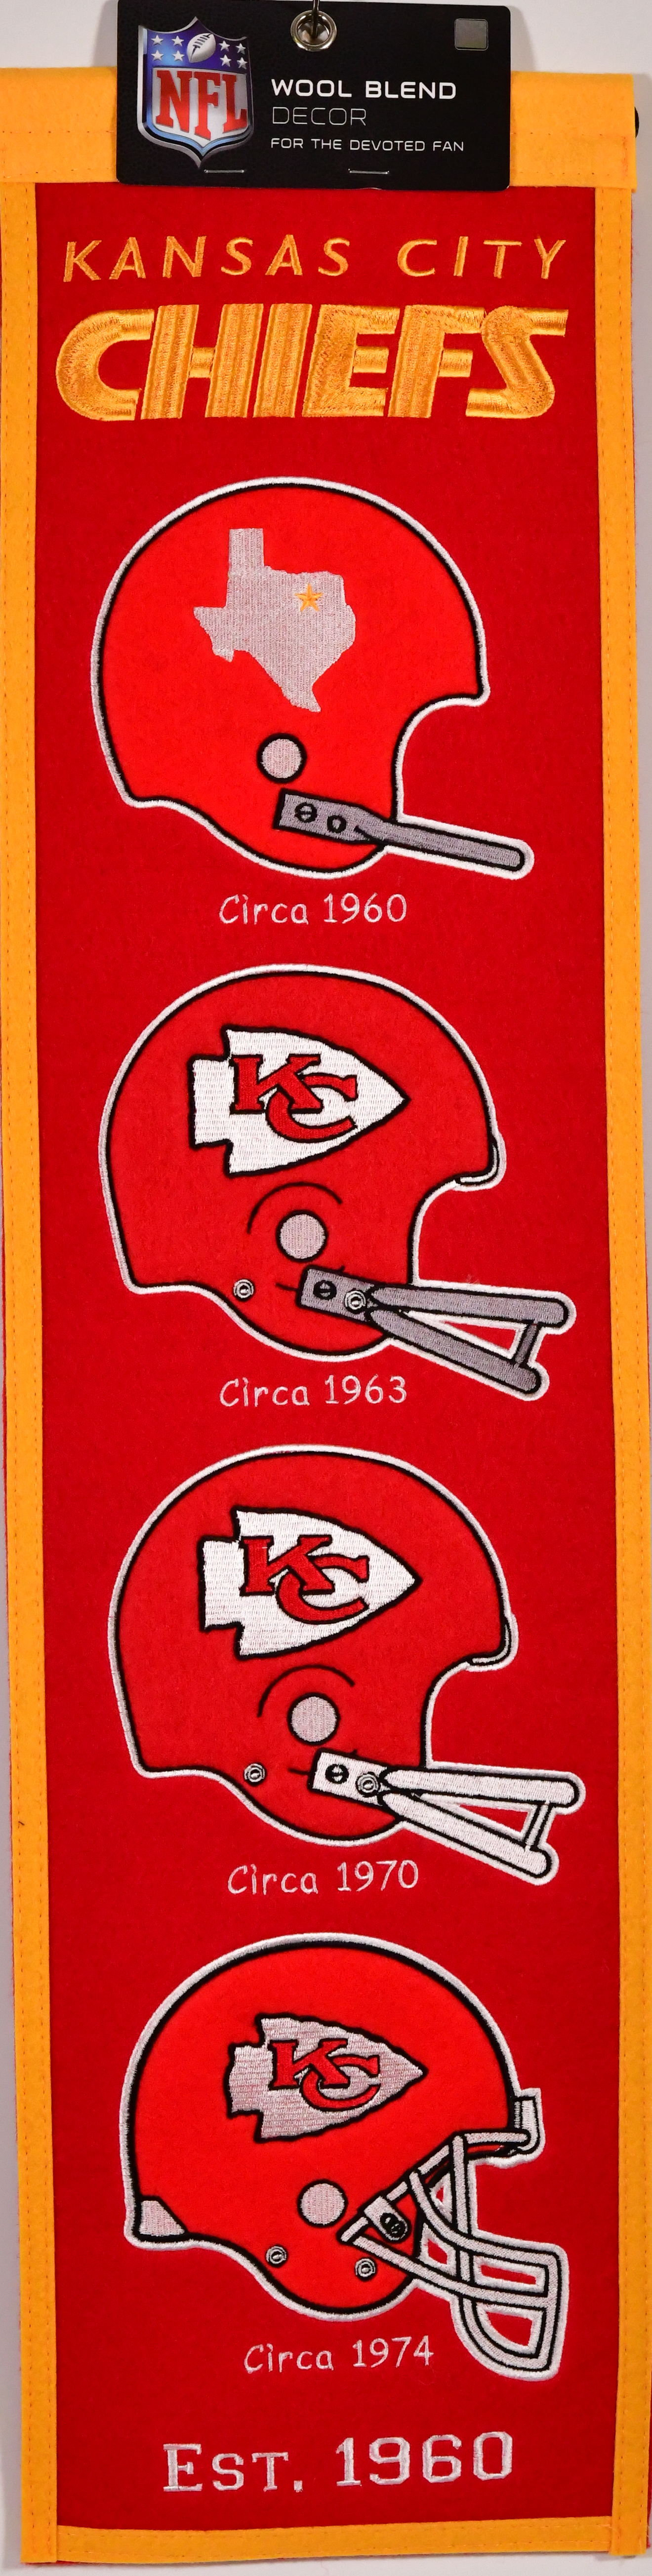 Kansas City Chiefs Heritage Banner